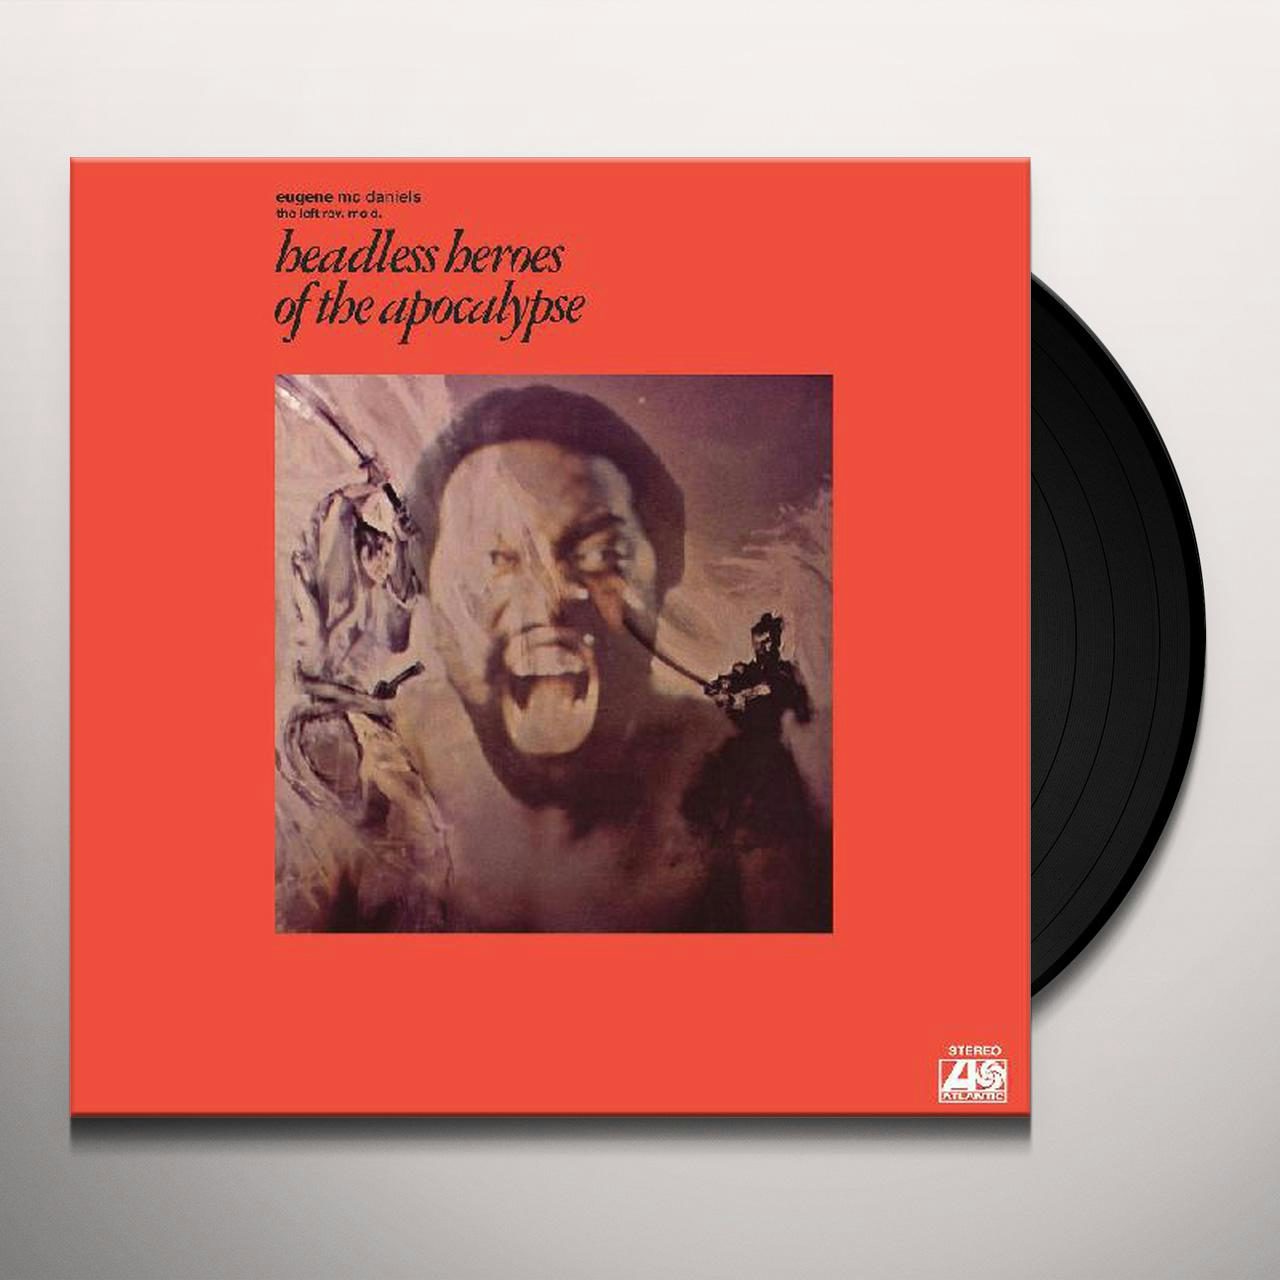 Eugene McDaniels Headless Heroes of the Apocalypse Vinyl Record